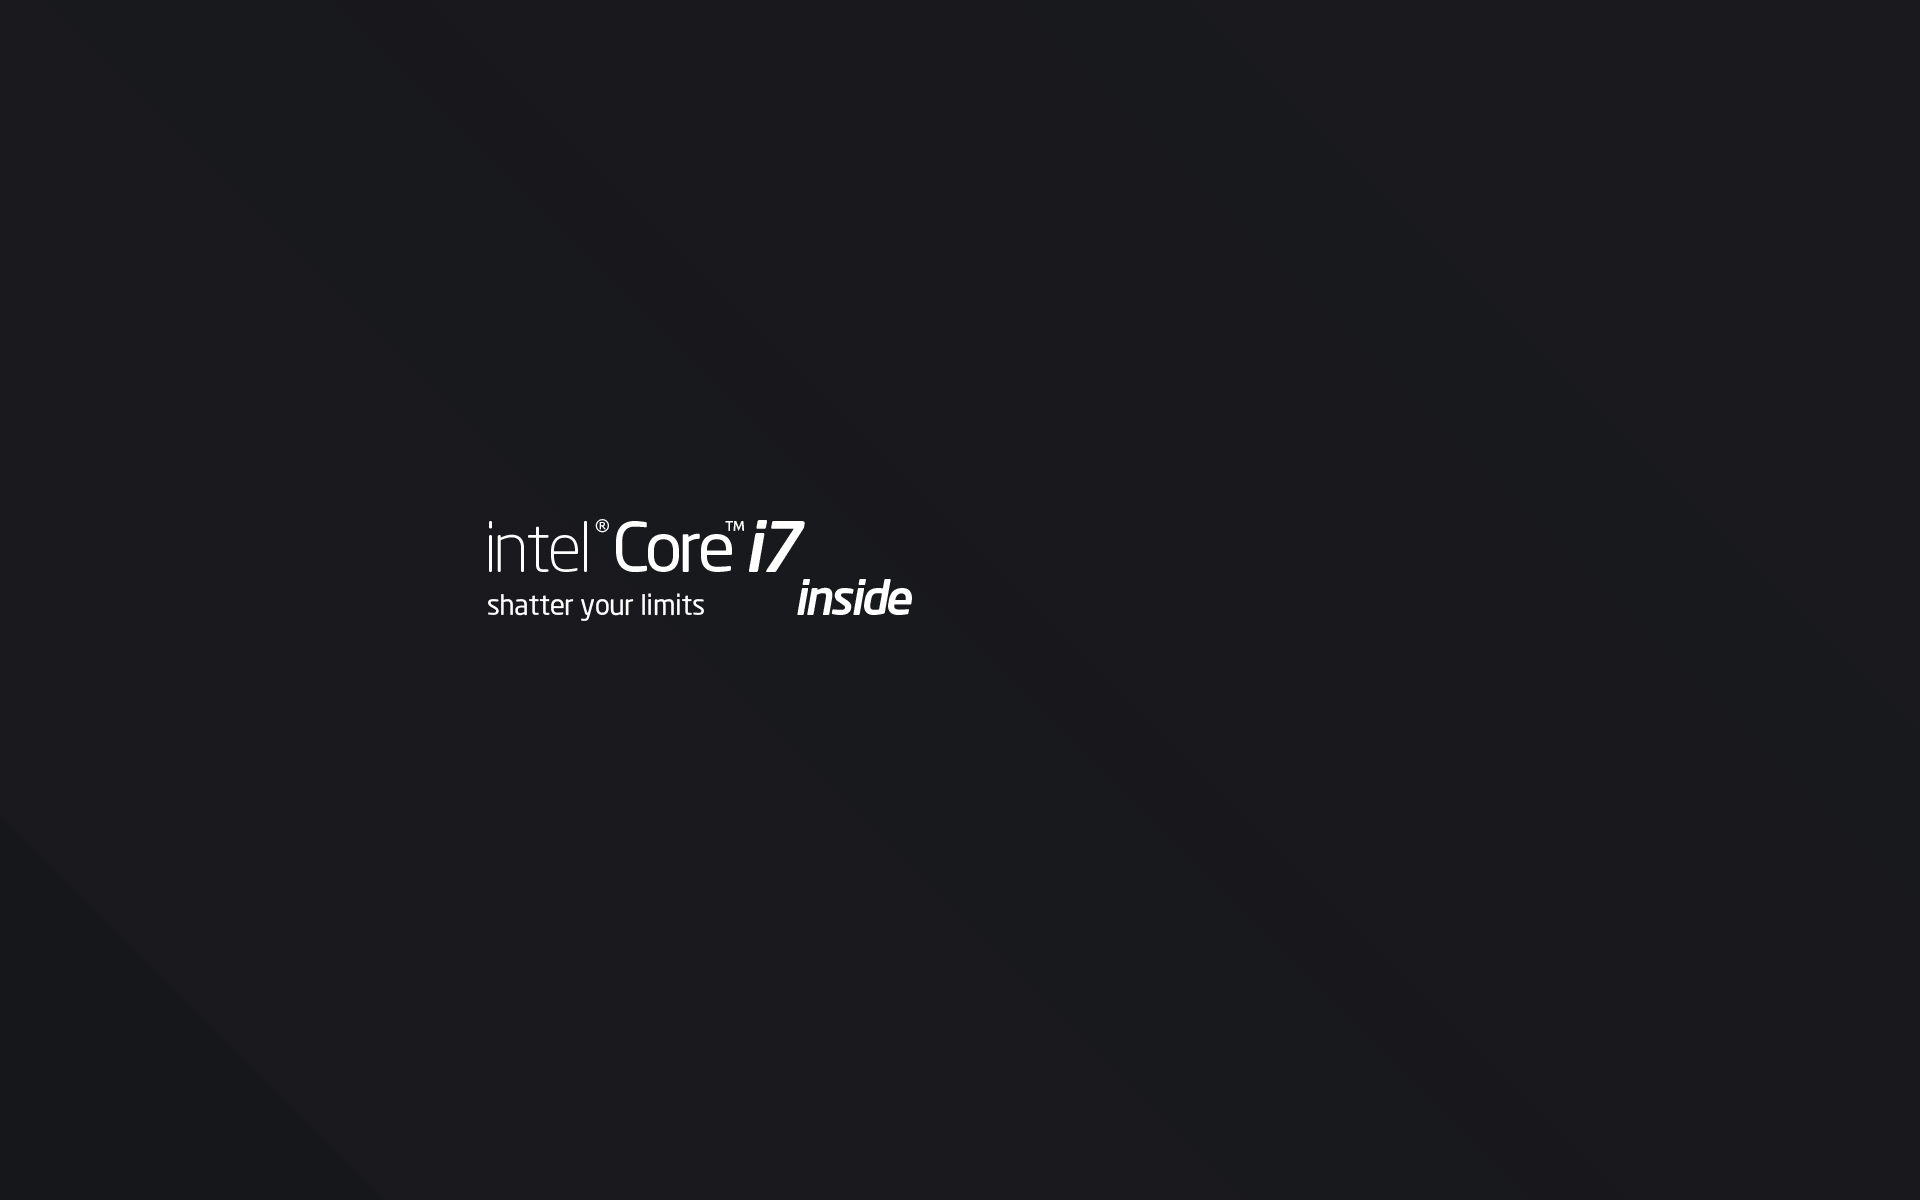 Pin Intel Core I7 Inside Wallpapers